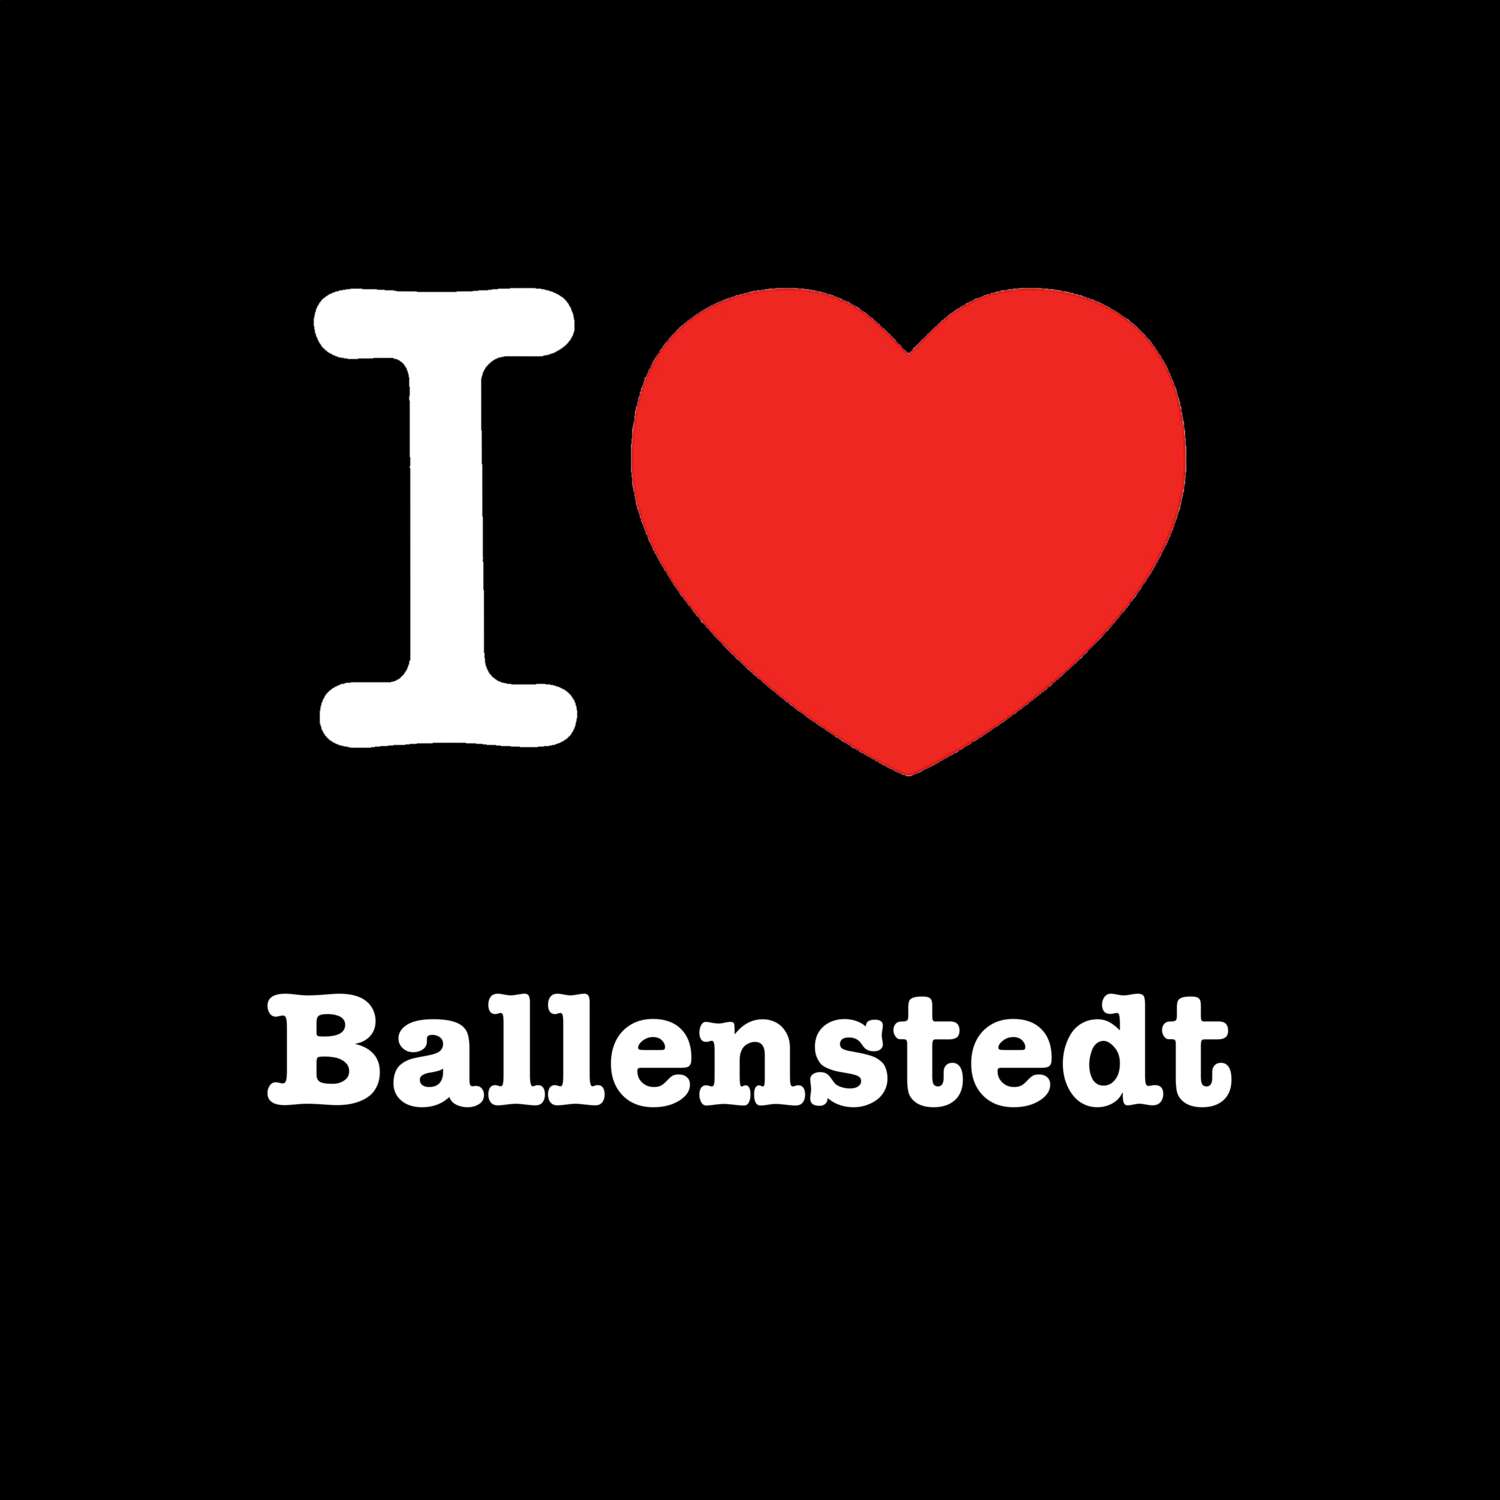 Ballenstedt T-Shirt »I love«